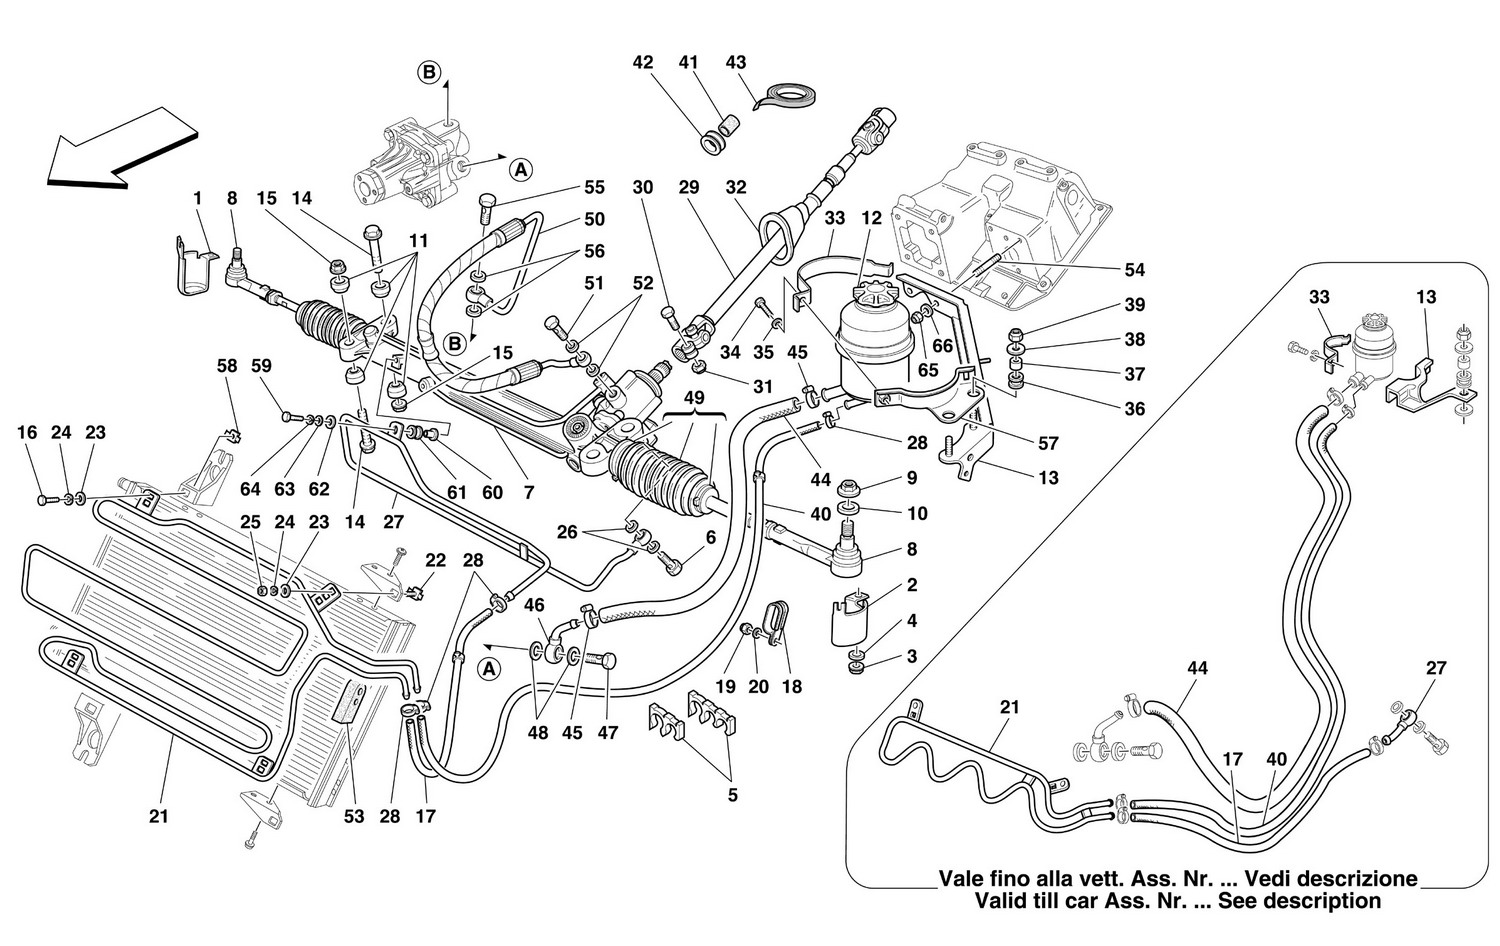 Schematic: Hydraulic Steering Box And Serpentine